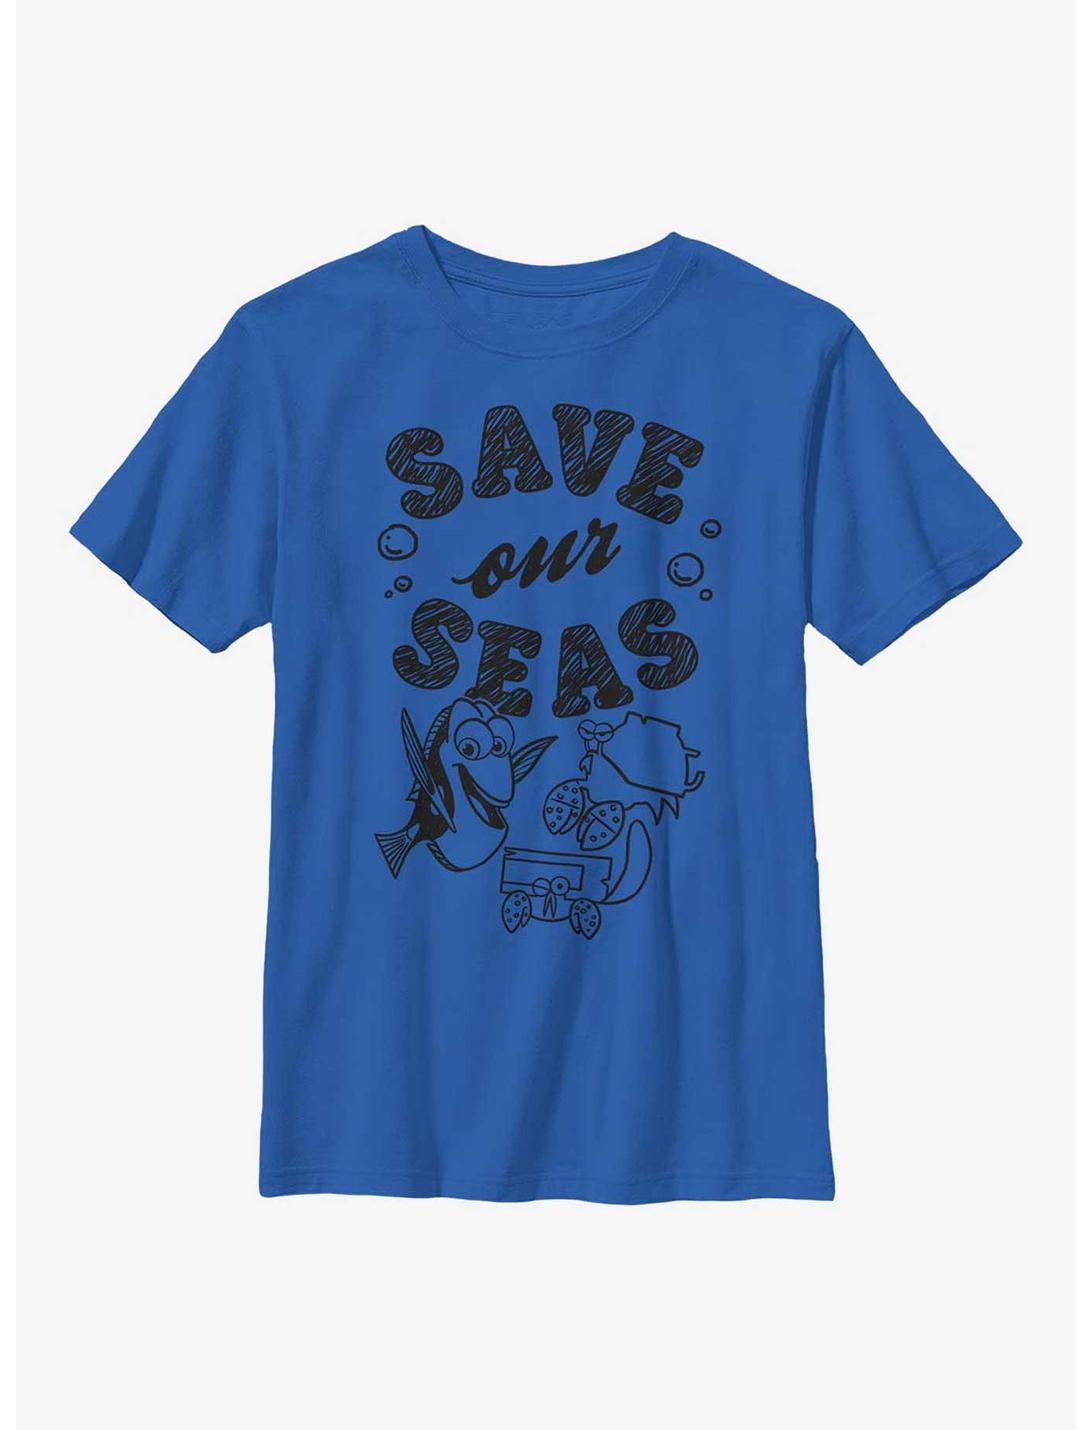 Disney Pixar Finding Nemo Save Our Seas Dory Youth T-Shirt, ROYAL, hi-res